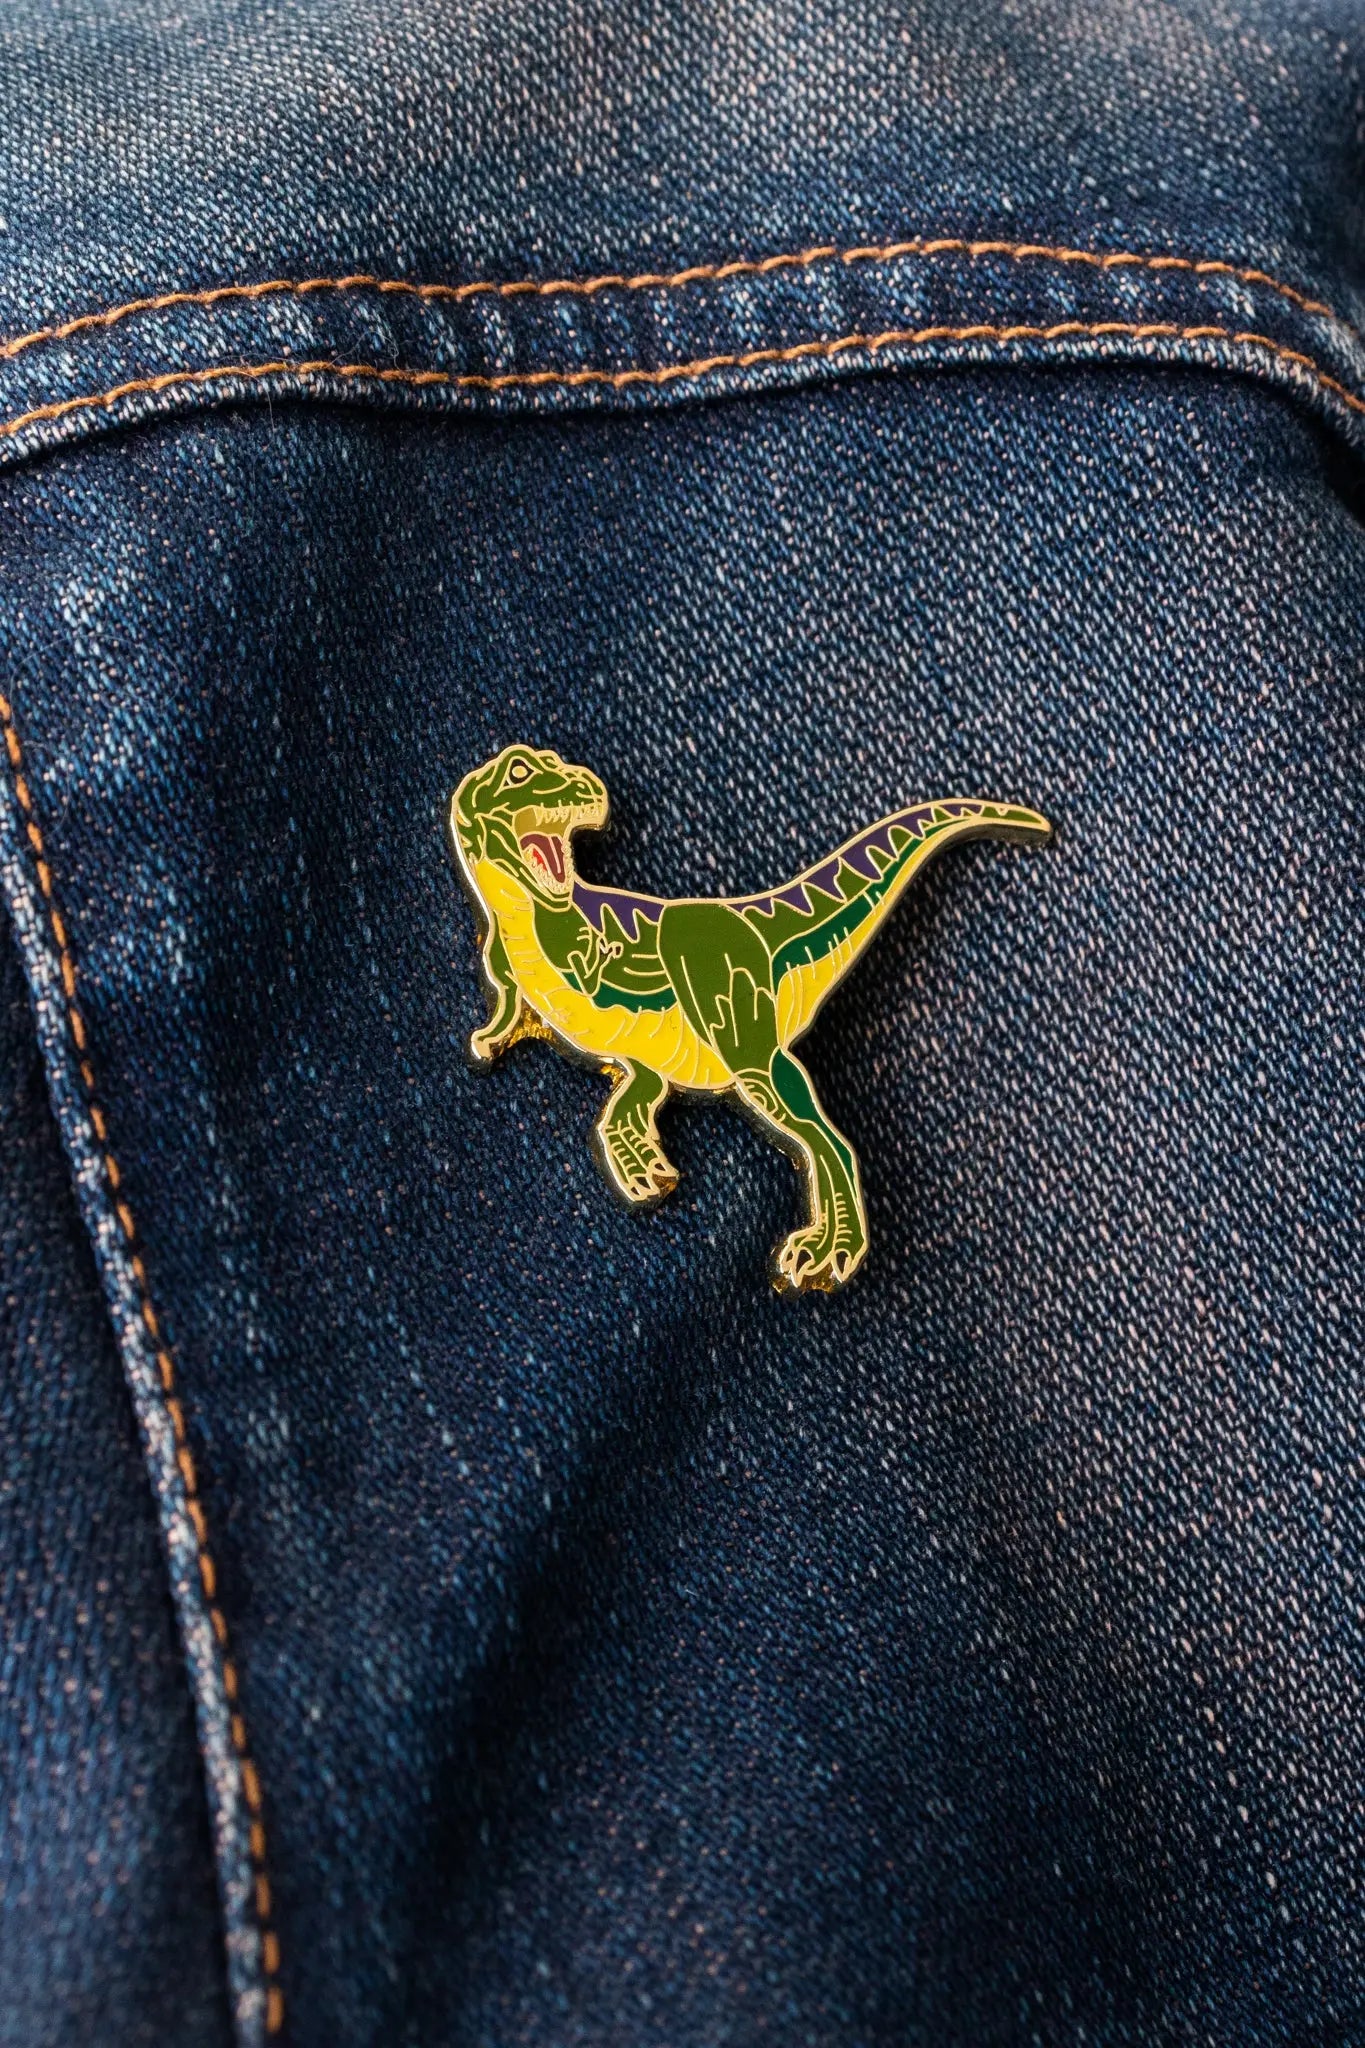 Tyrannosaurus Rex Pin (without Feathers)